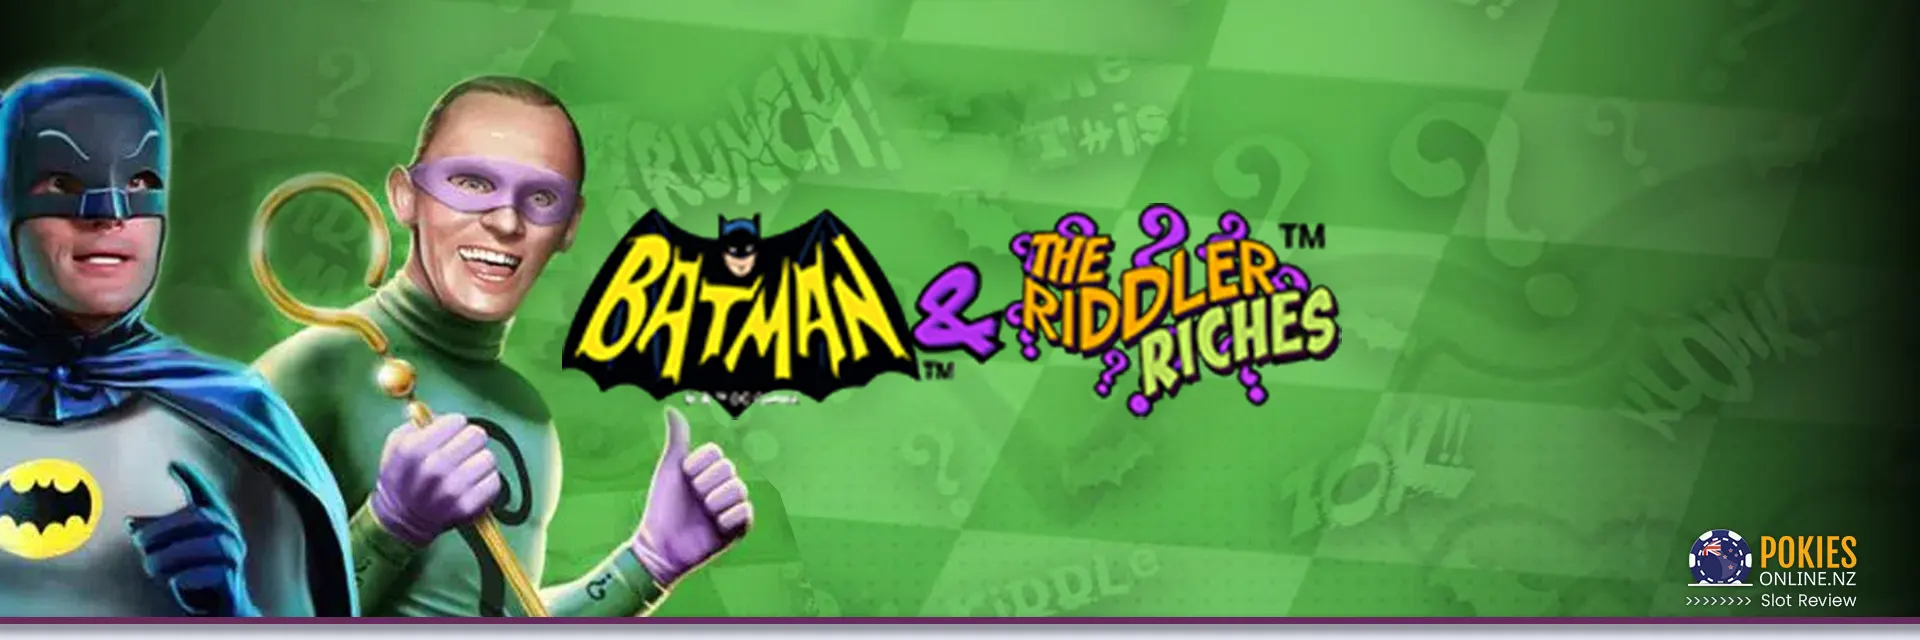 Batman and the riddler slot banner